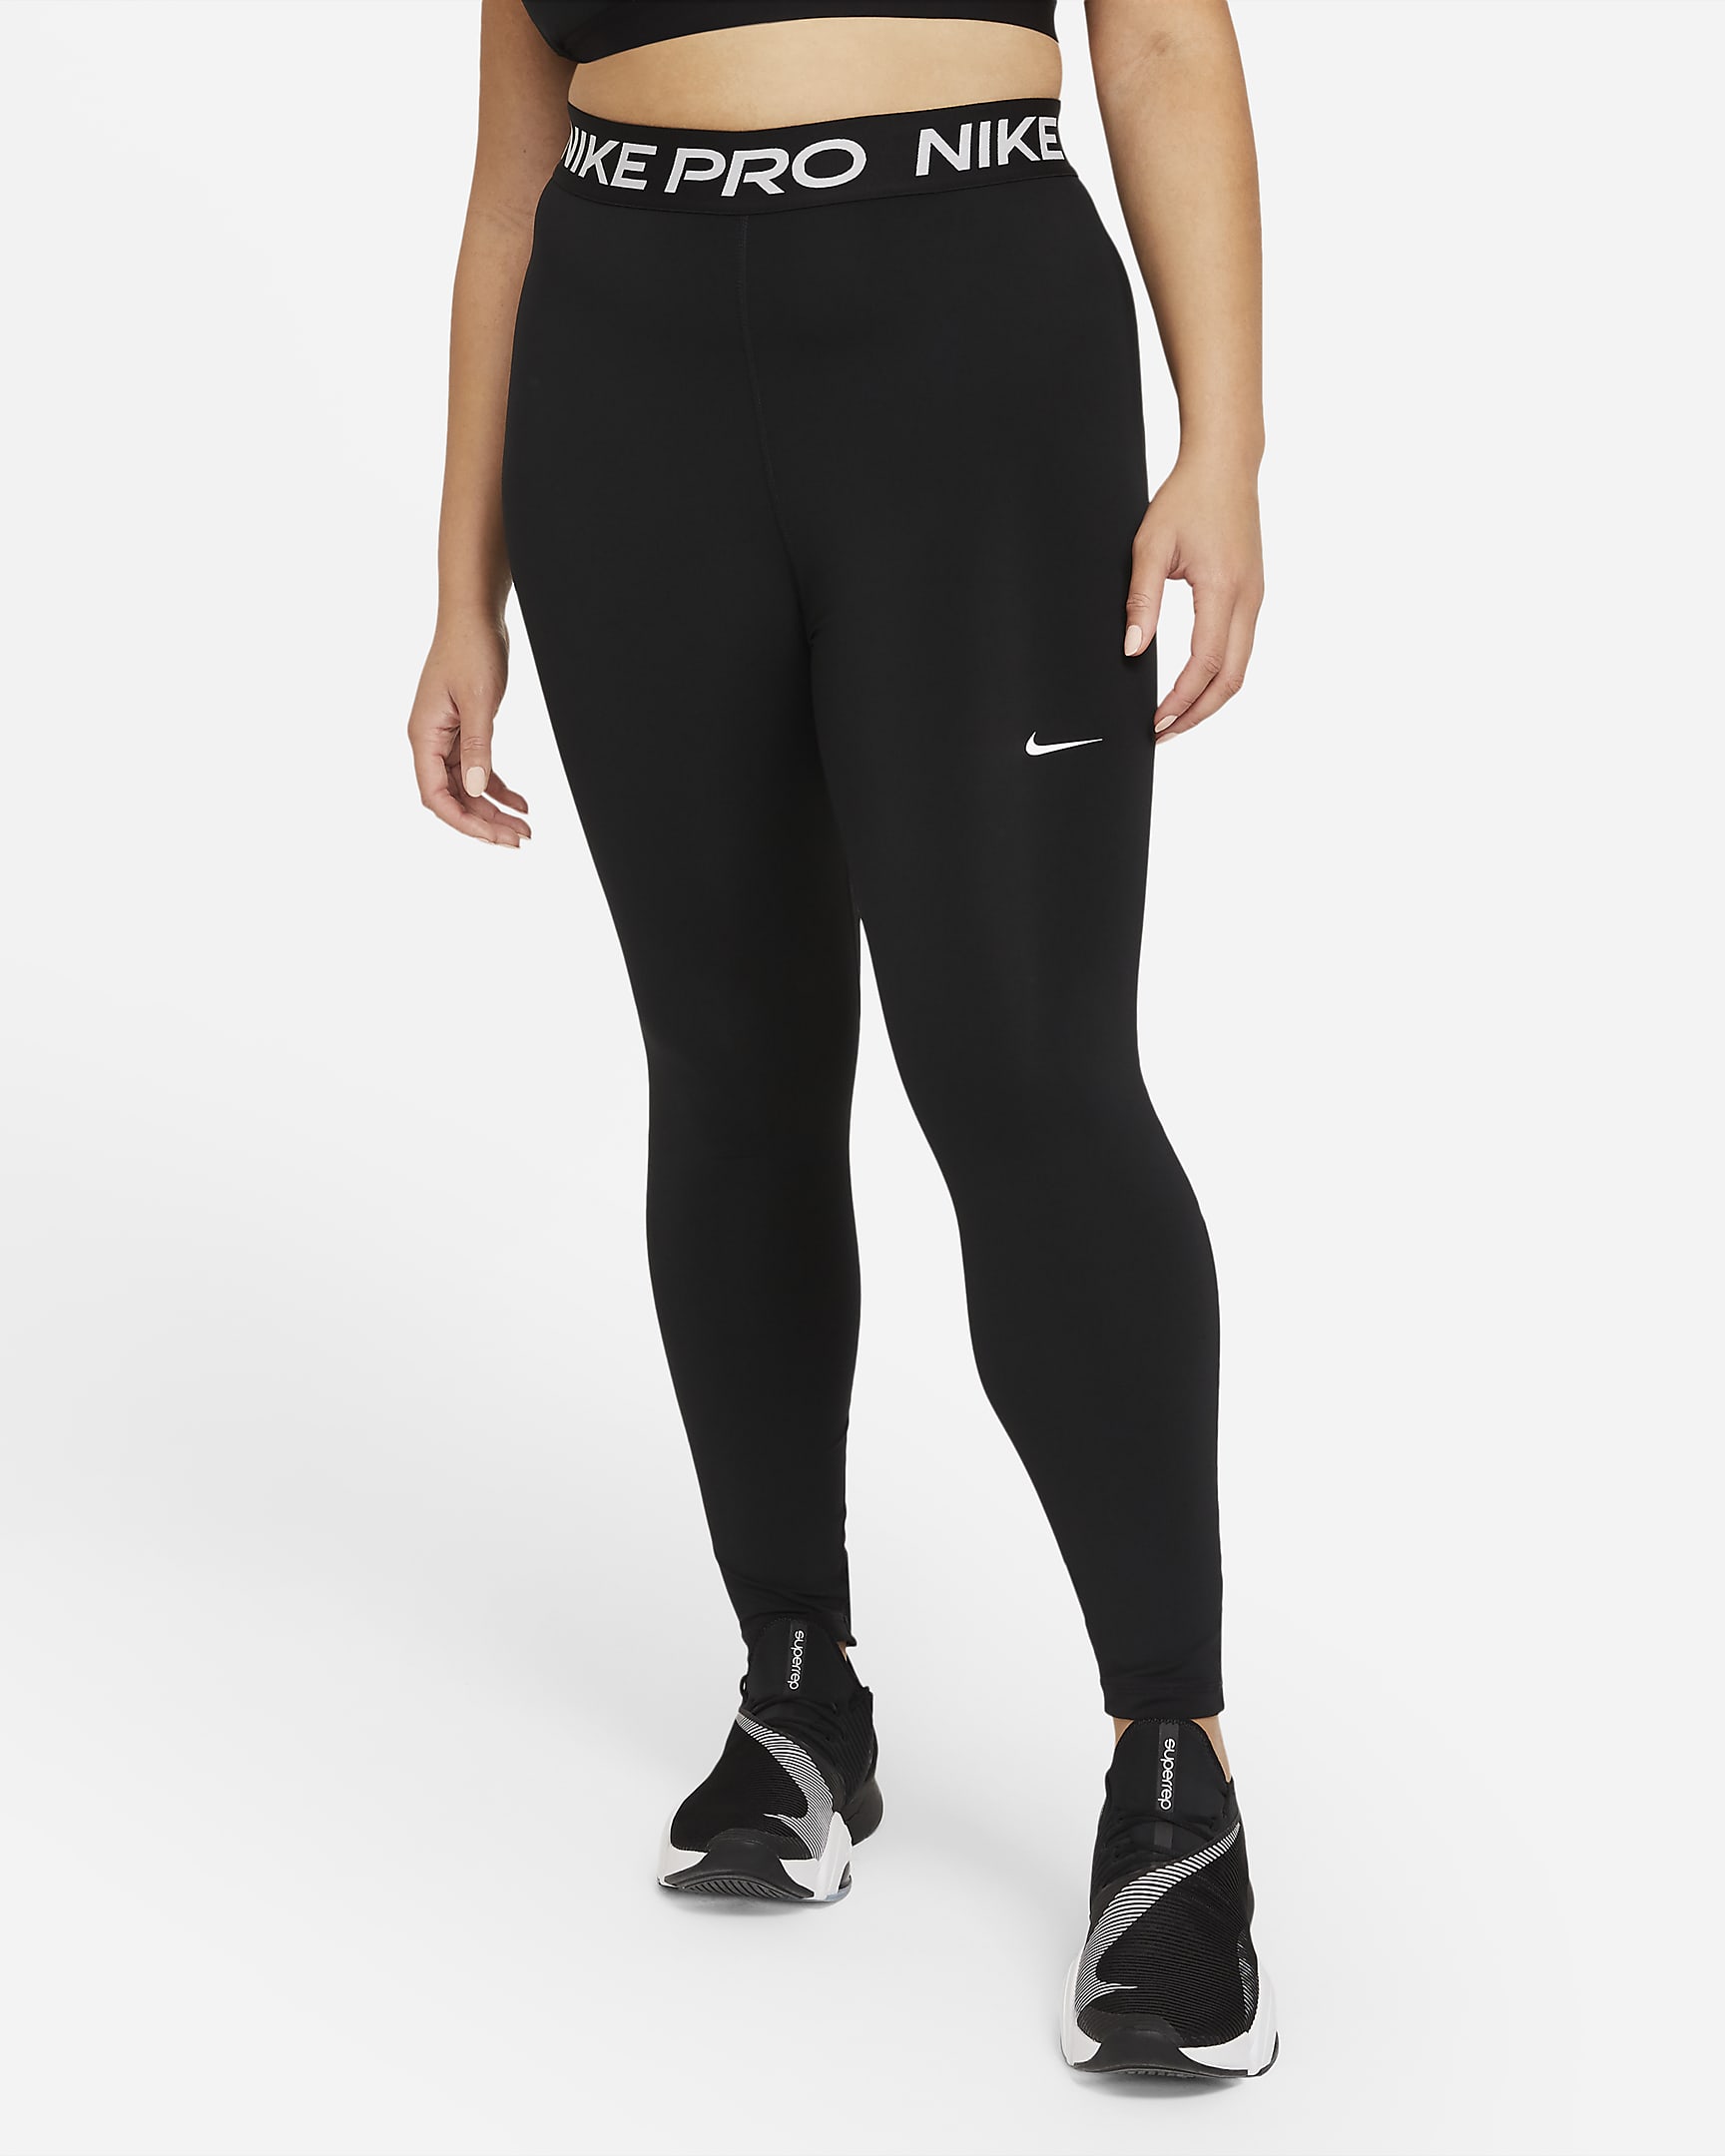 Nike Pro 365 Damen-Leggings (große Größe) - Schwarz/Weiß